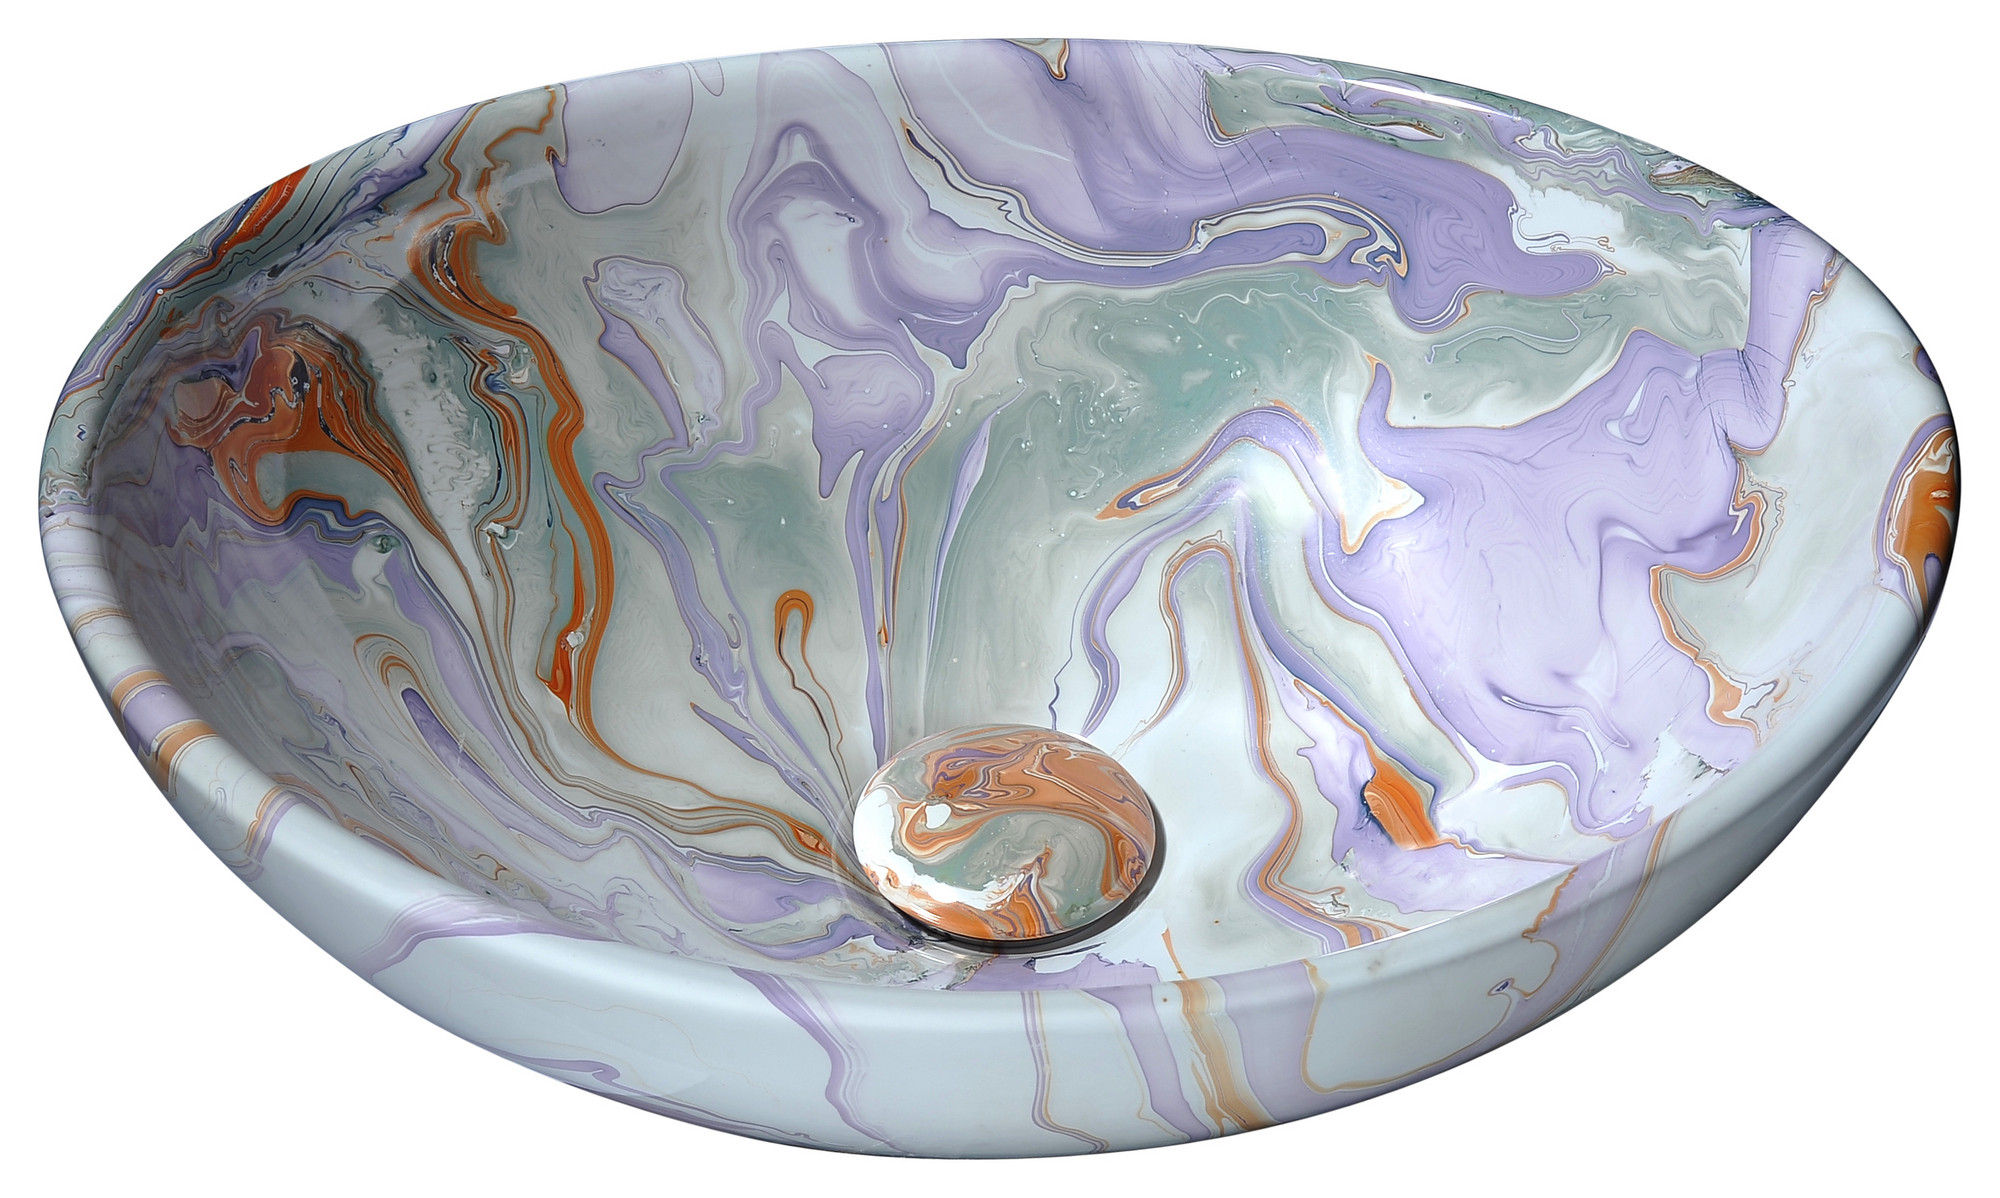 ANZZI LS-AZ274 Sona Vitreous China Ceramic Vessel Sink In Marbled Adobe